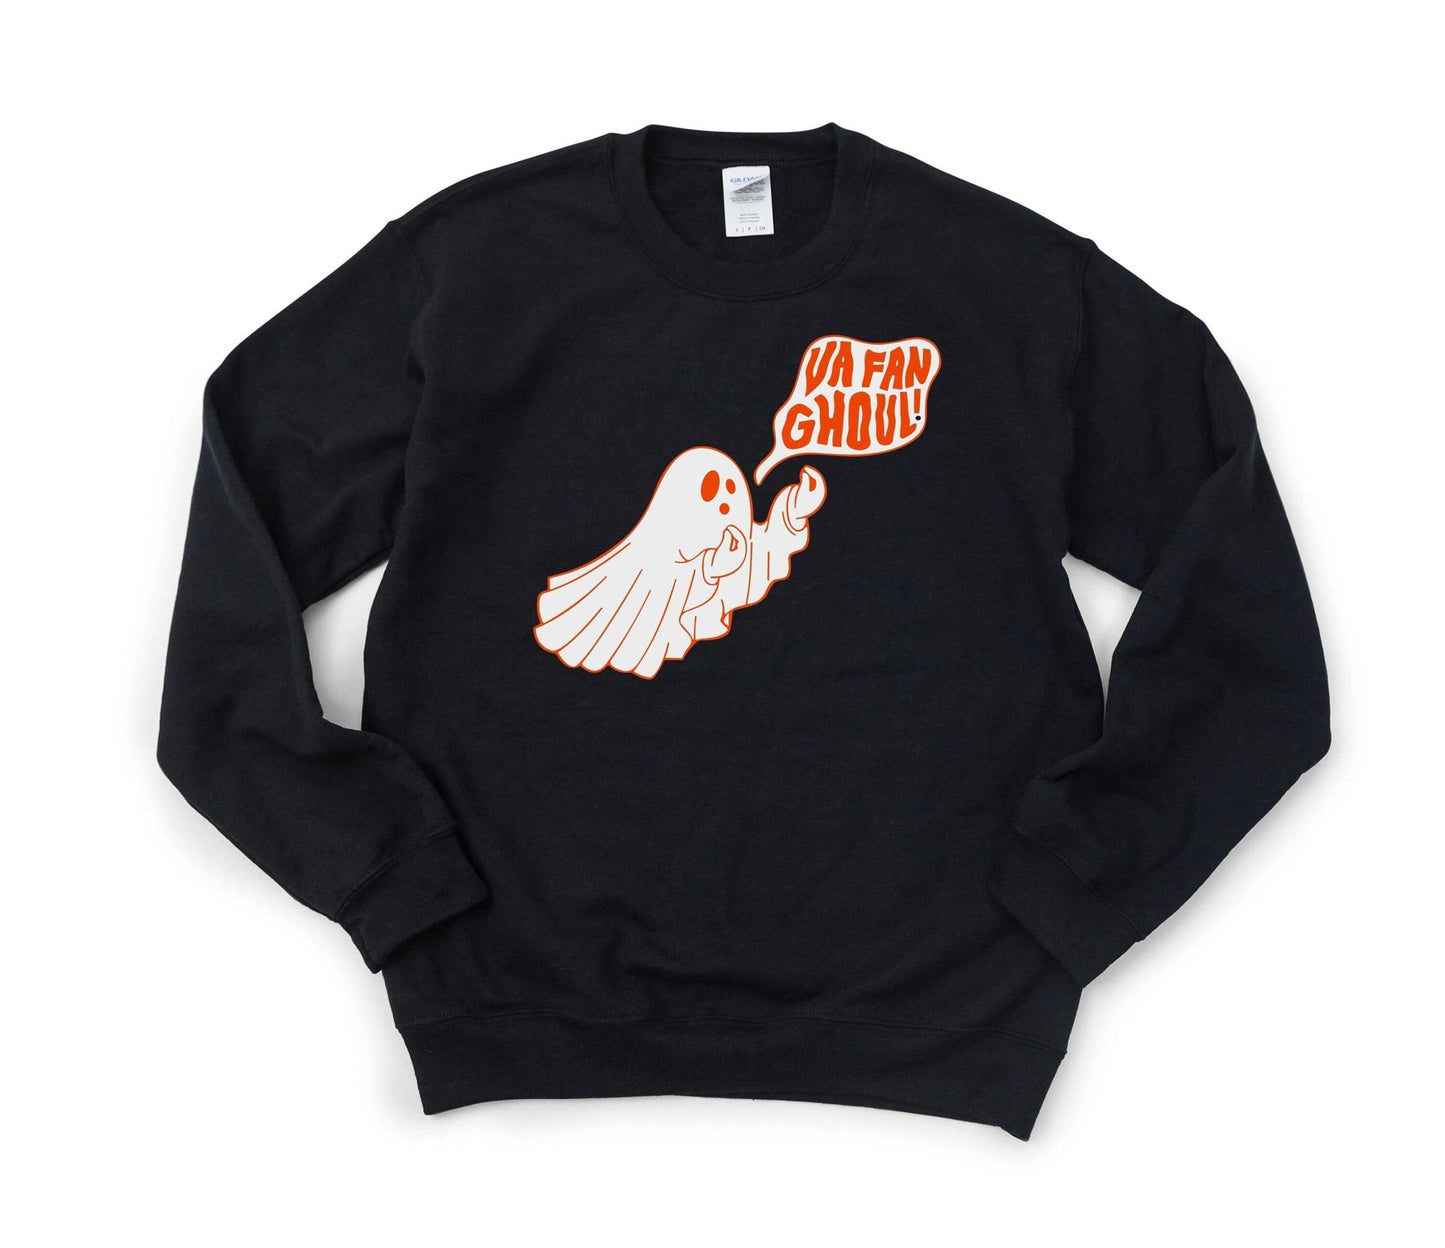 Va Fan Ghoul Sweatshirt, vaffanculo sweatshirt, Halloween Ghost sweatshir, Ghost crewneck Italian Halloween Shirt - SBS T Shop